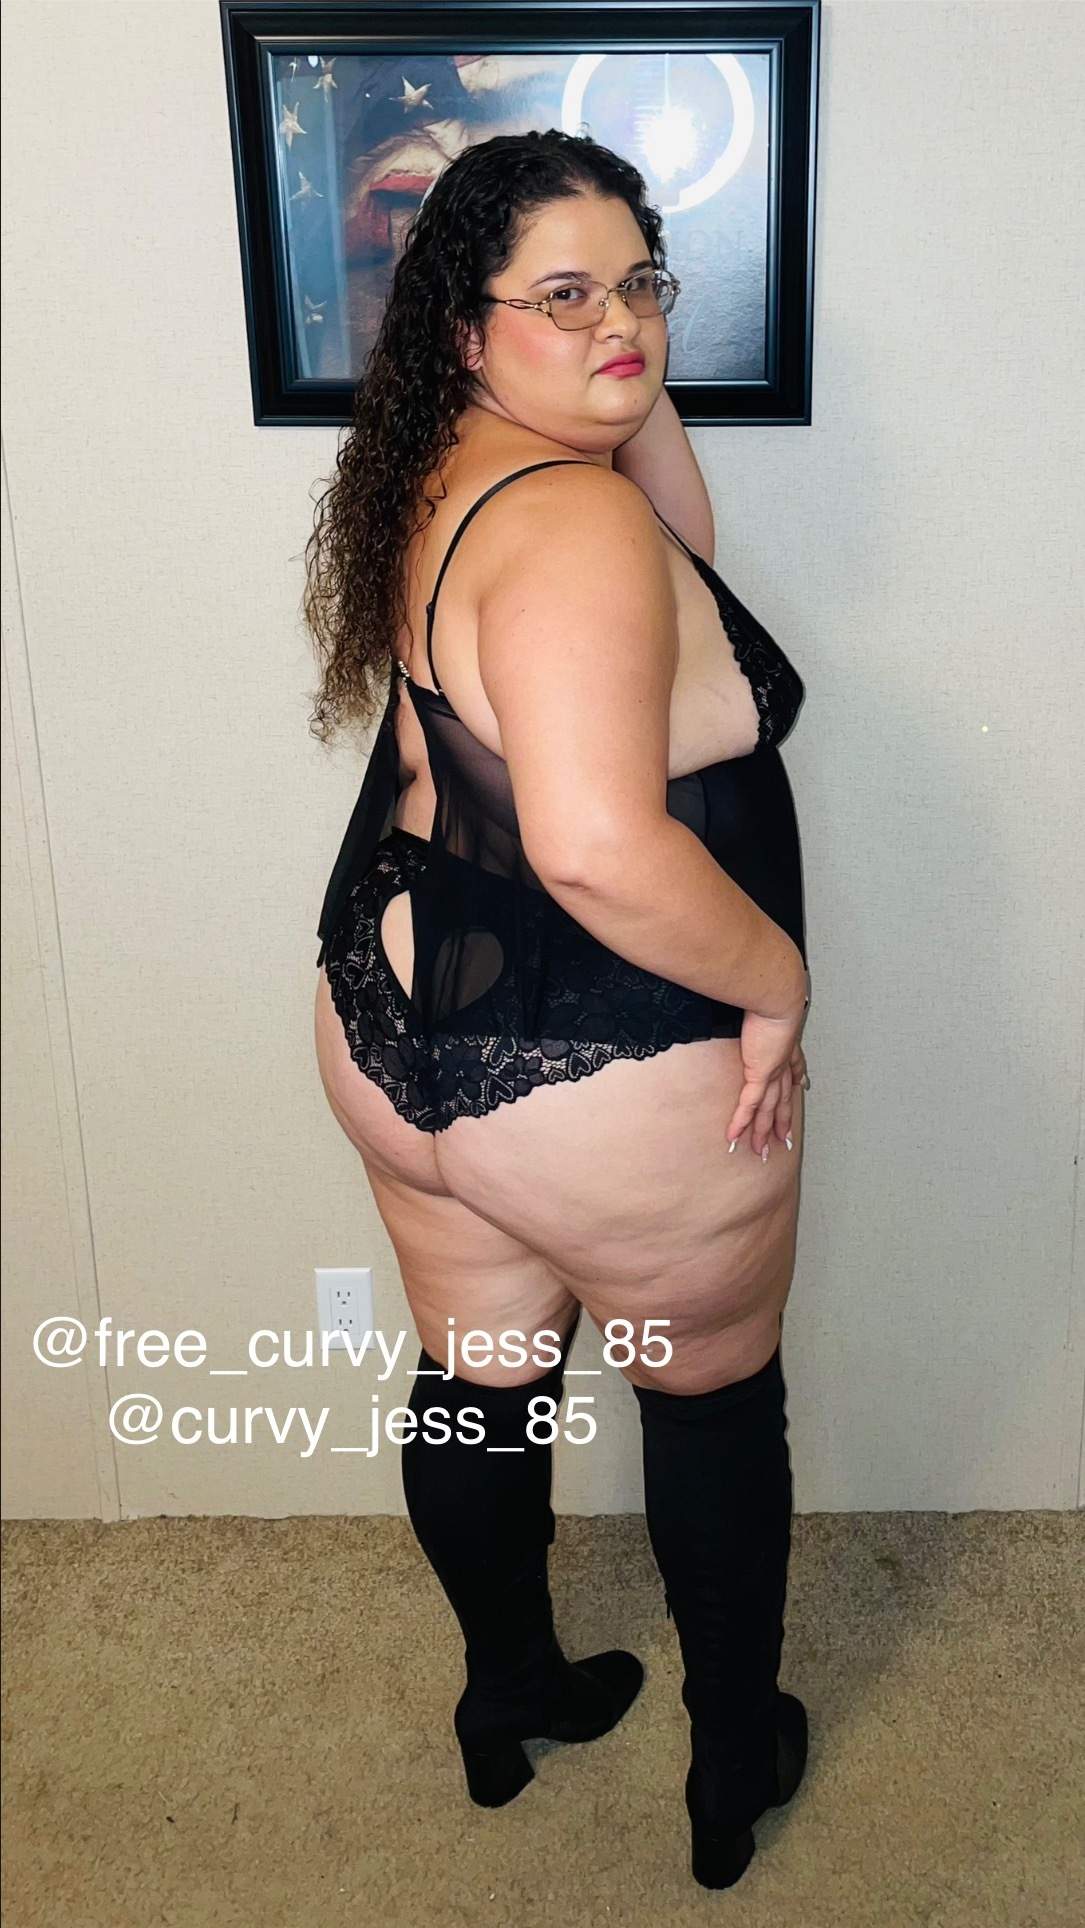 free_curvy_jess_85